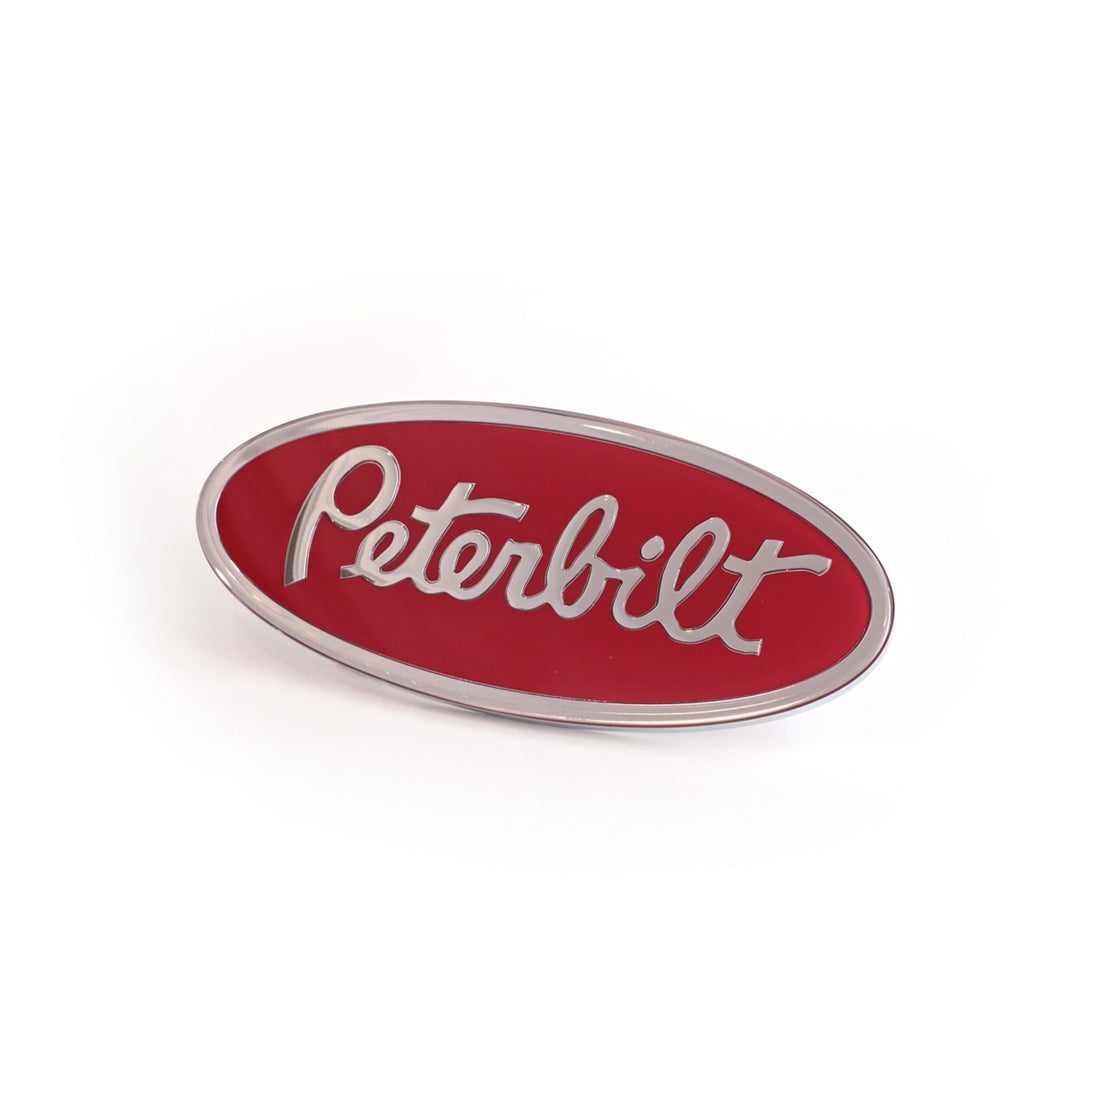 Peterbilt Oval Emblem Chrome/Dark Red (450)